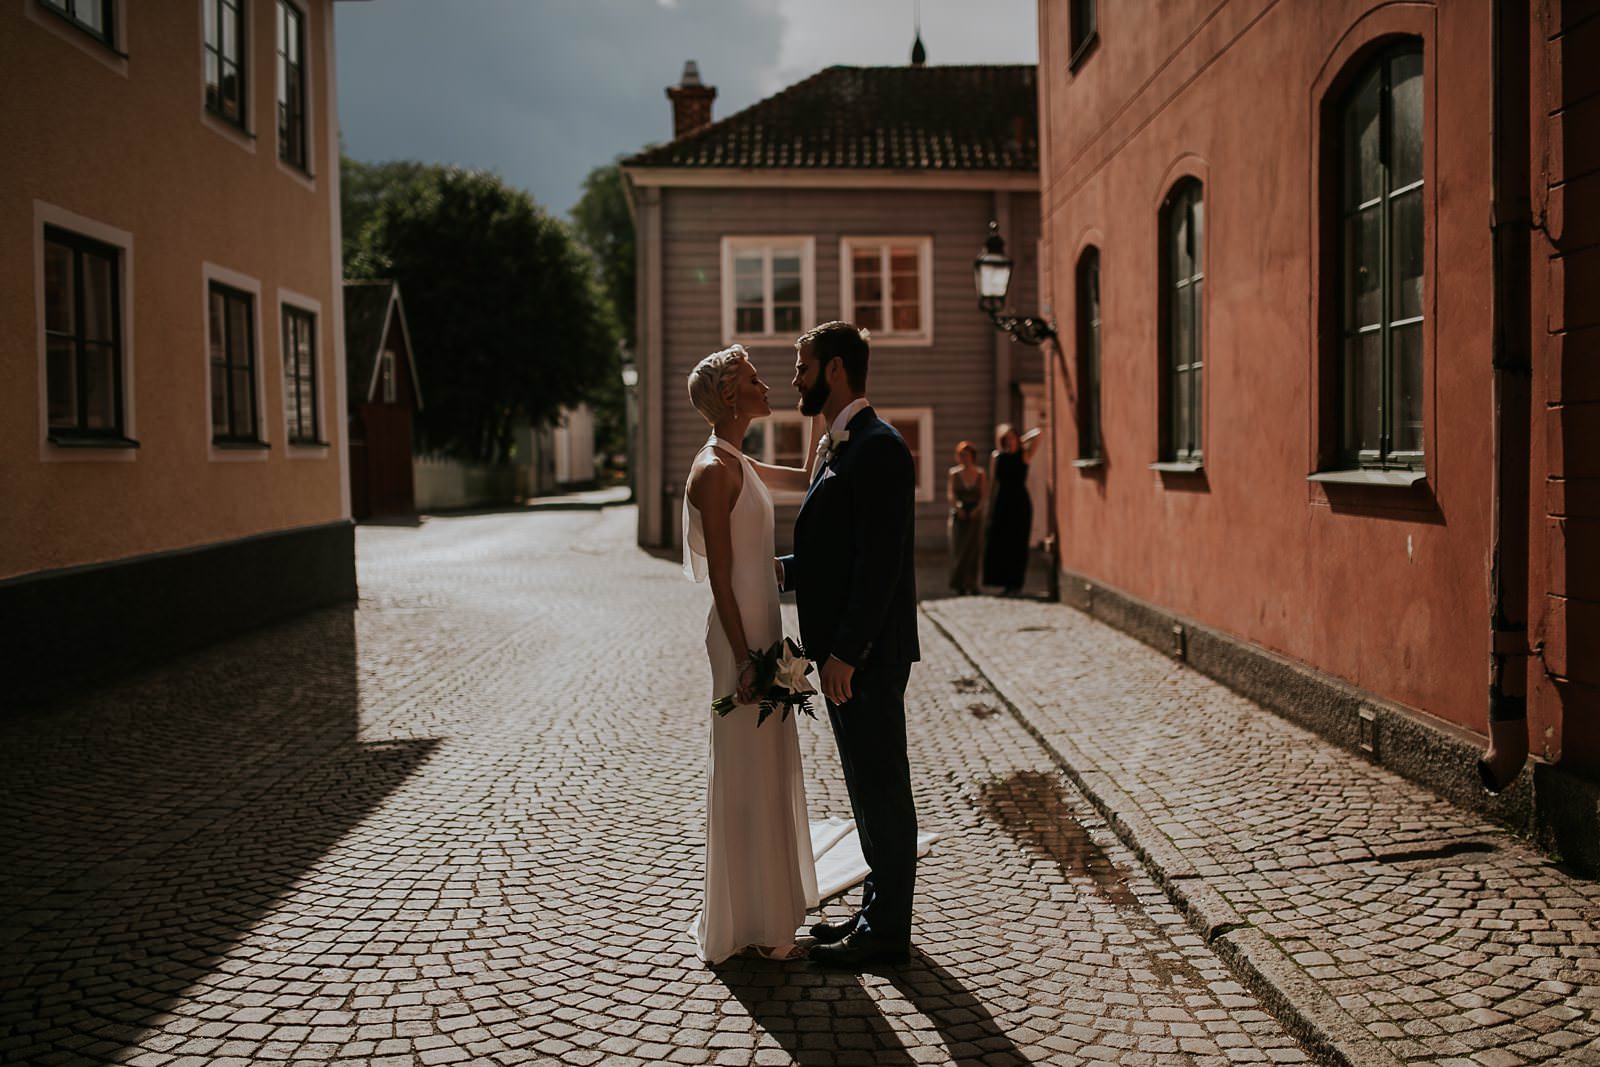 bride and groom first look in street of Vadstena, Sweden